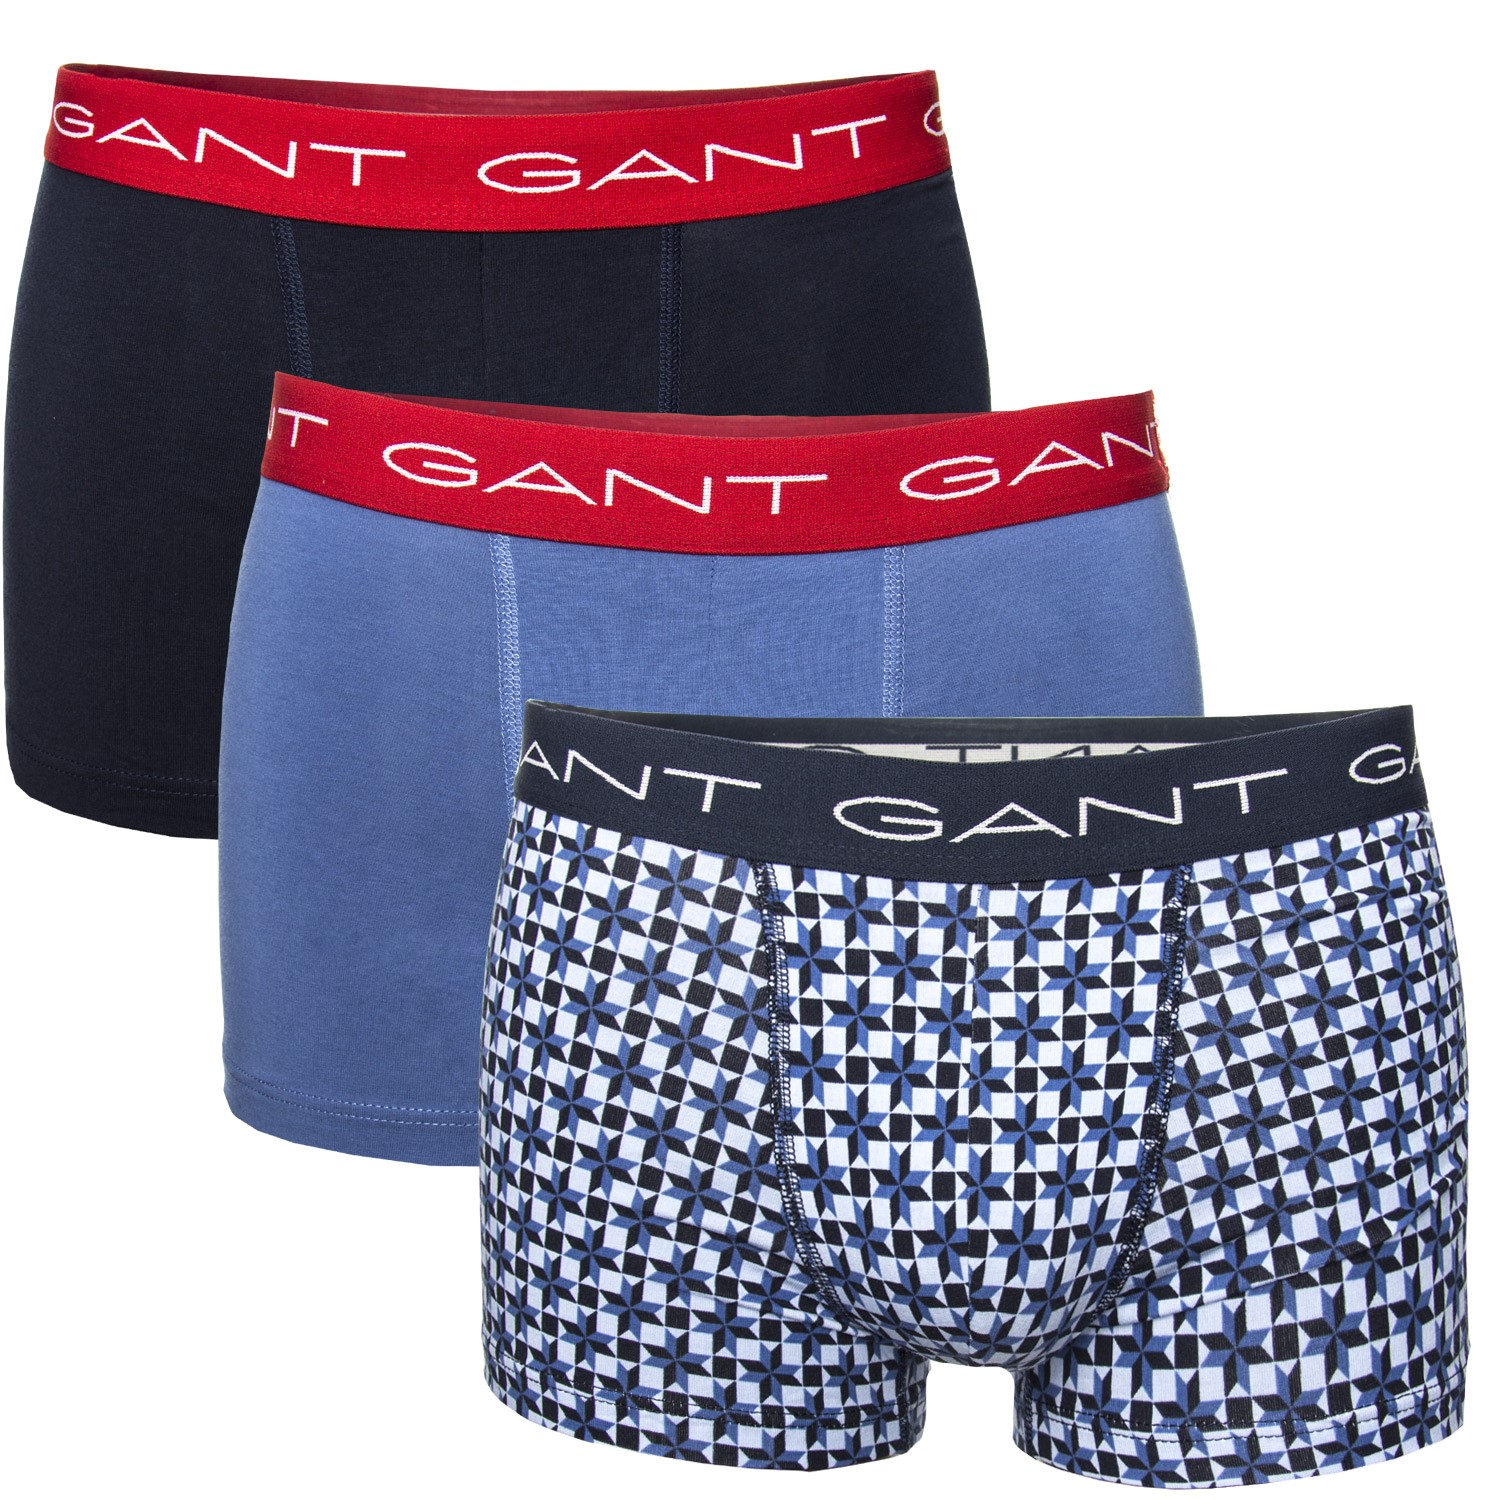 Gant Trunk Winter Star Gift Box